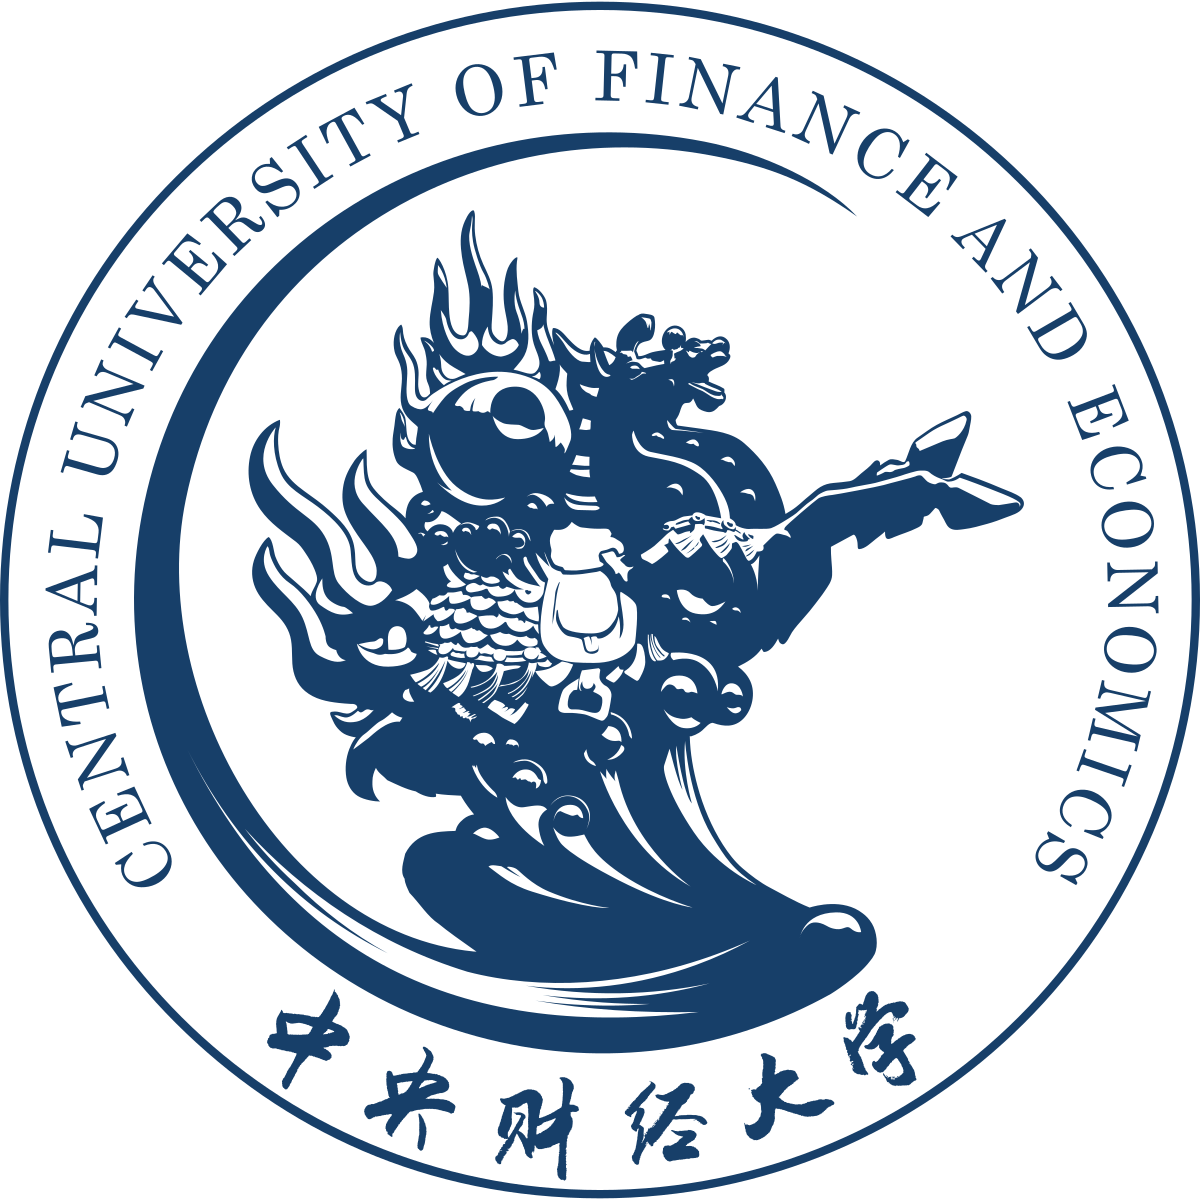 Central University of Finance and Economics logo